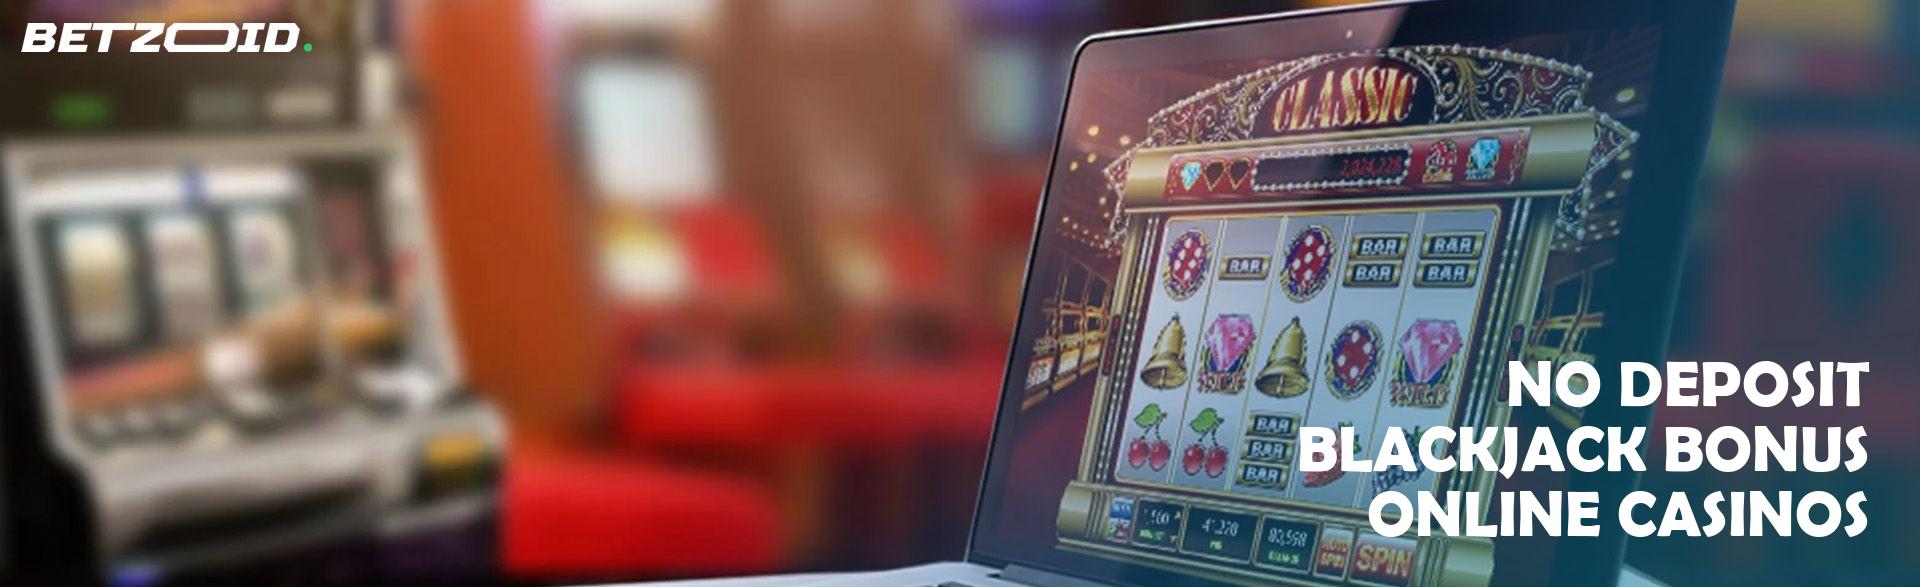 No Deposit Blackjack Bonus Online Casinos.